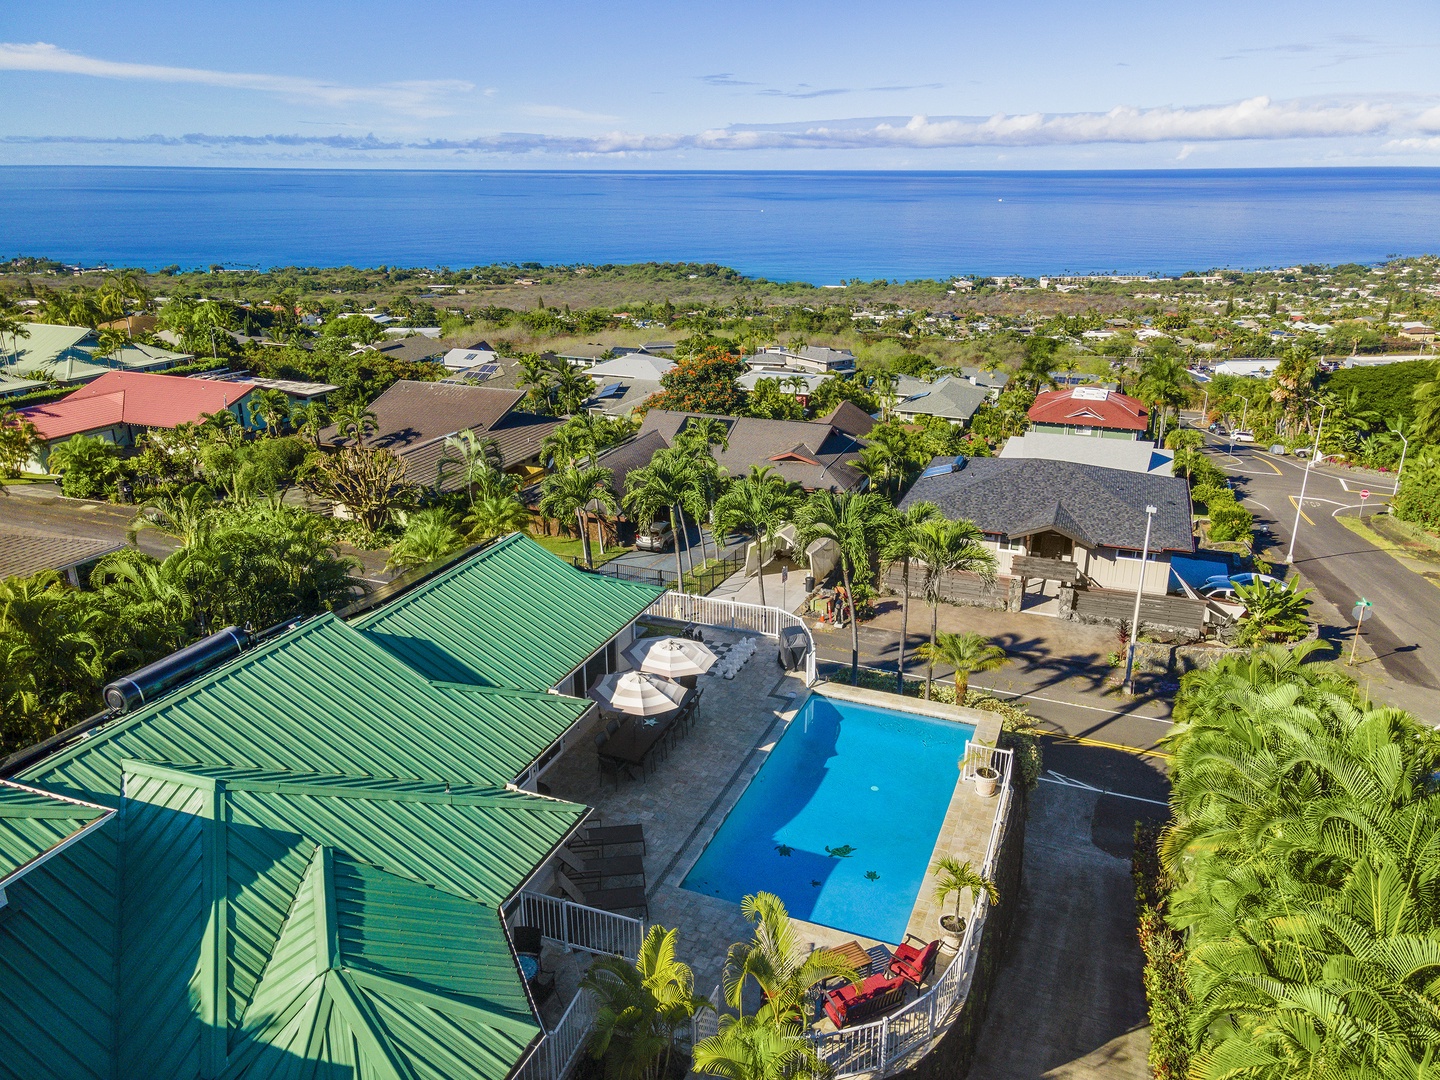 Kailua-Kona Vacation Rentals, Honu Hale - Aerial views